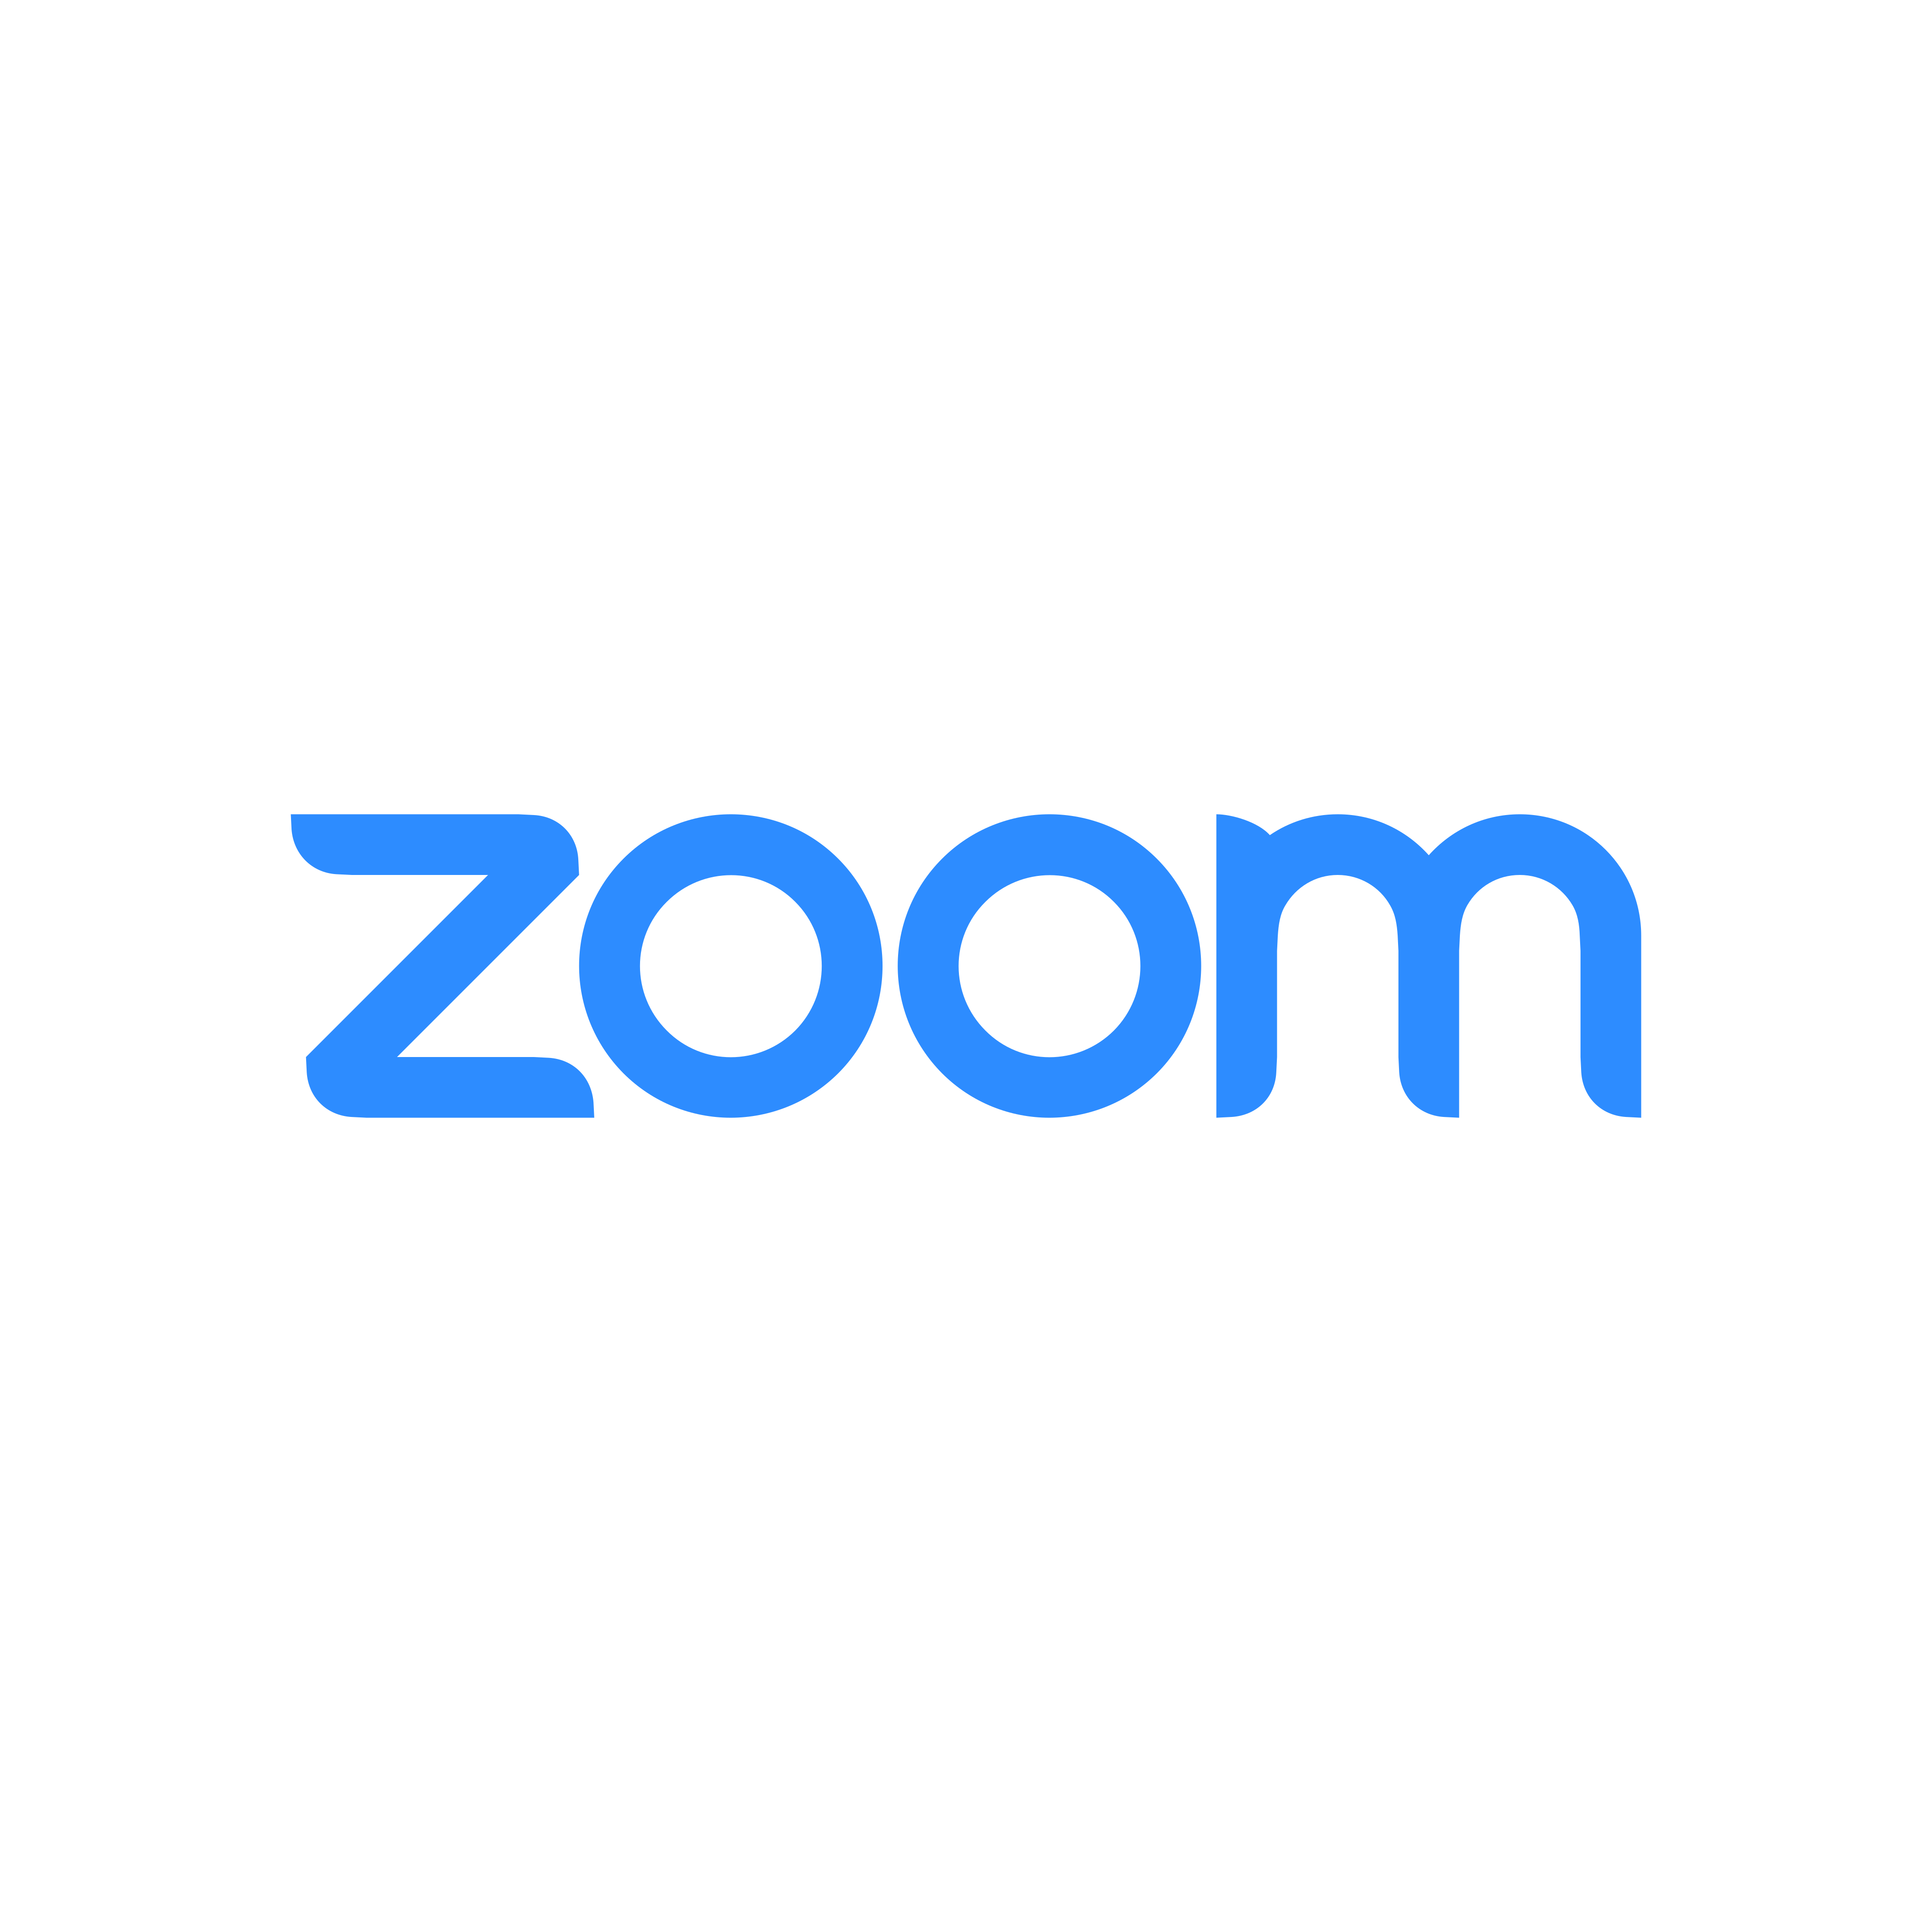 Zoom Logo PNG - 177483